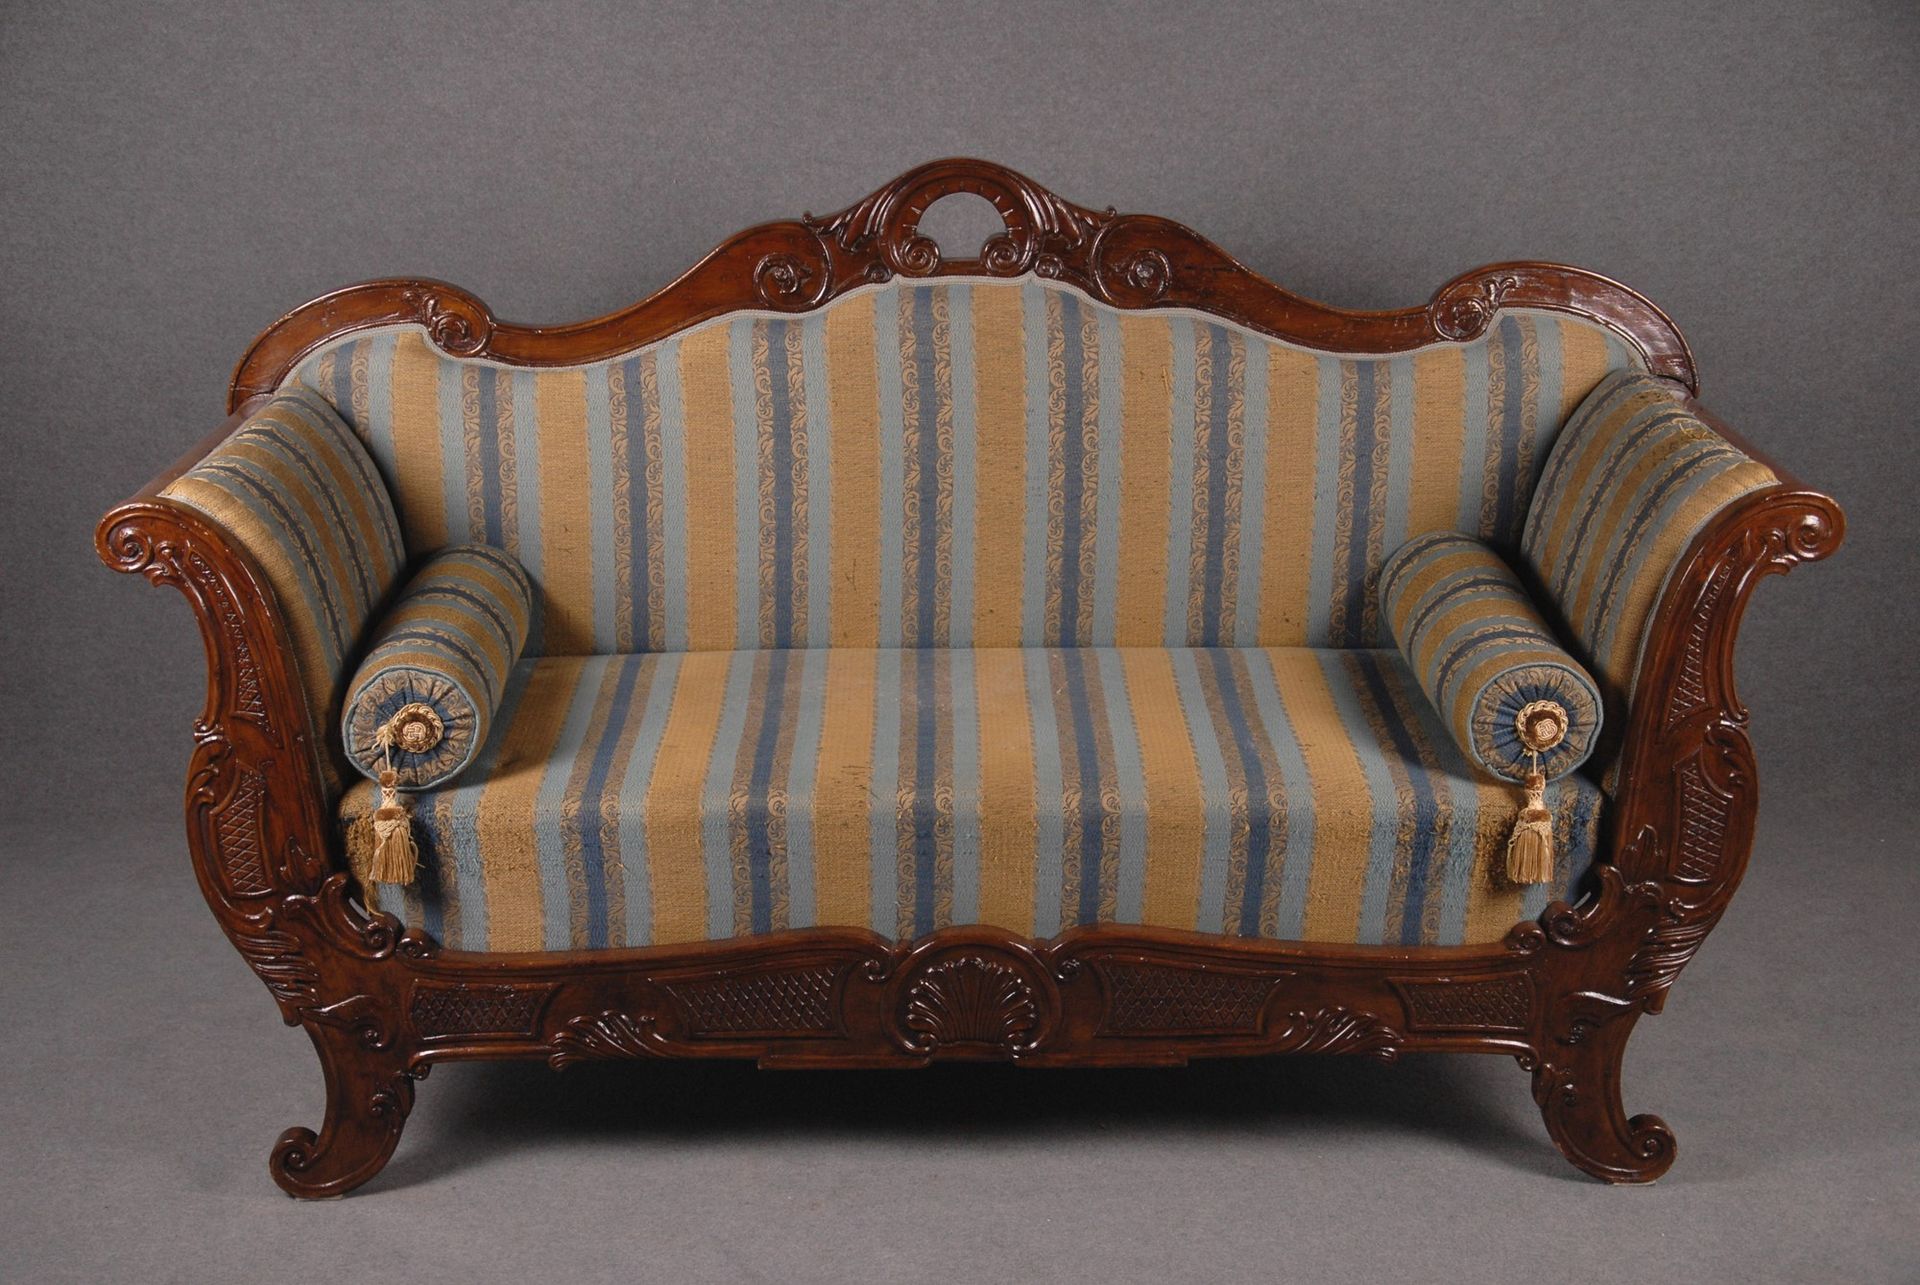 Sofa 胡桃木雕花沙发，雕刻有几何和卷轴图案，配有大马士革软垫。路易-菲利普时期。缺陷。178x60厘米左右。